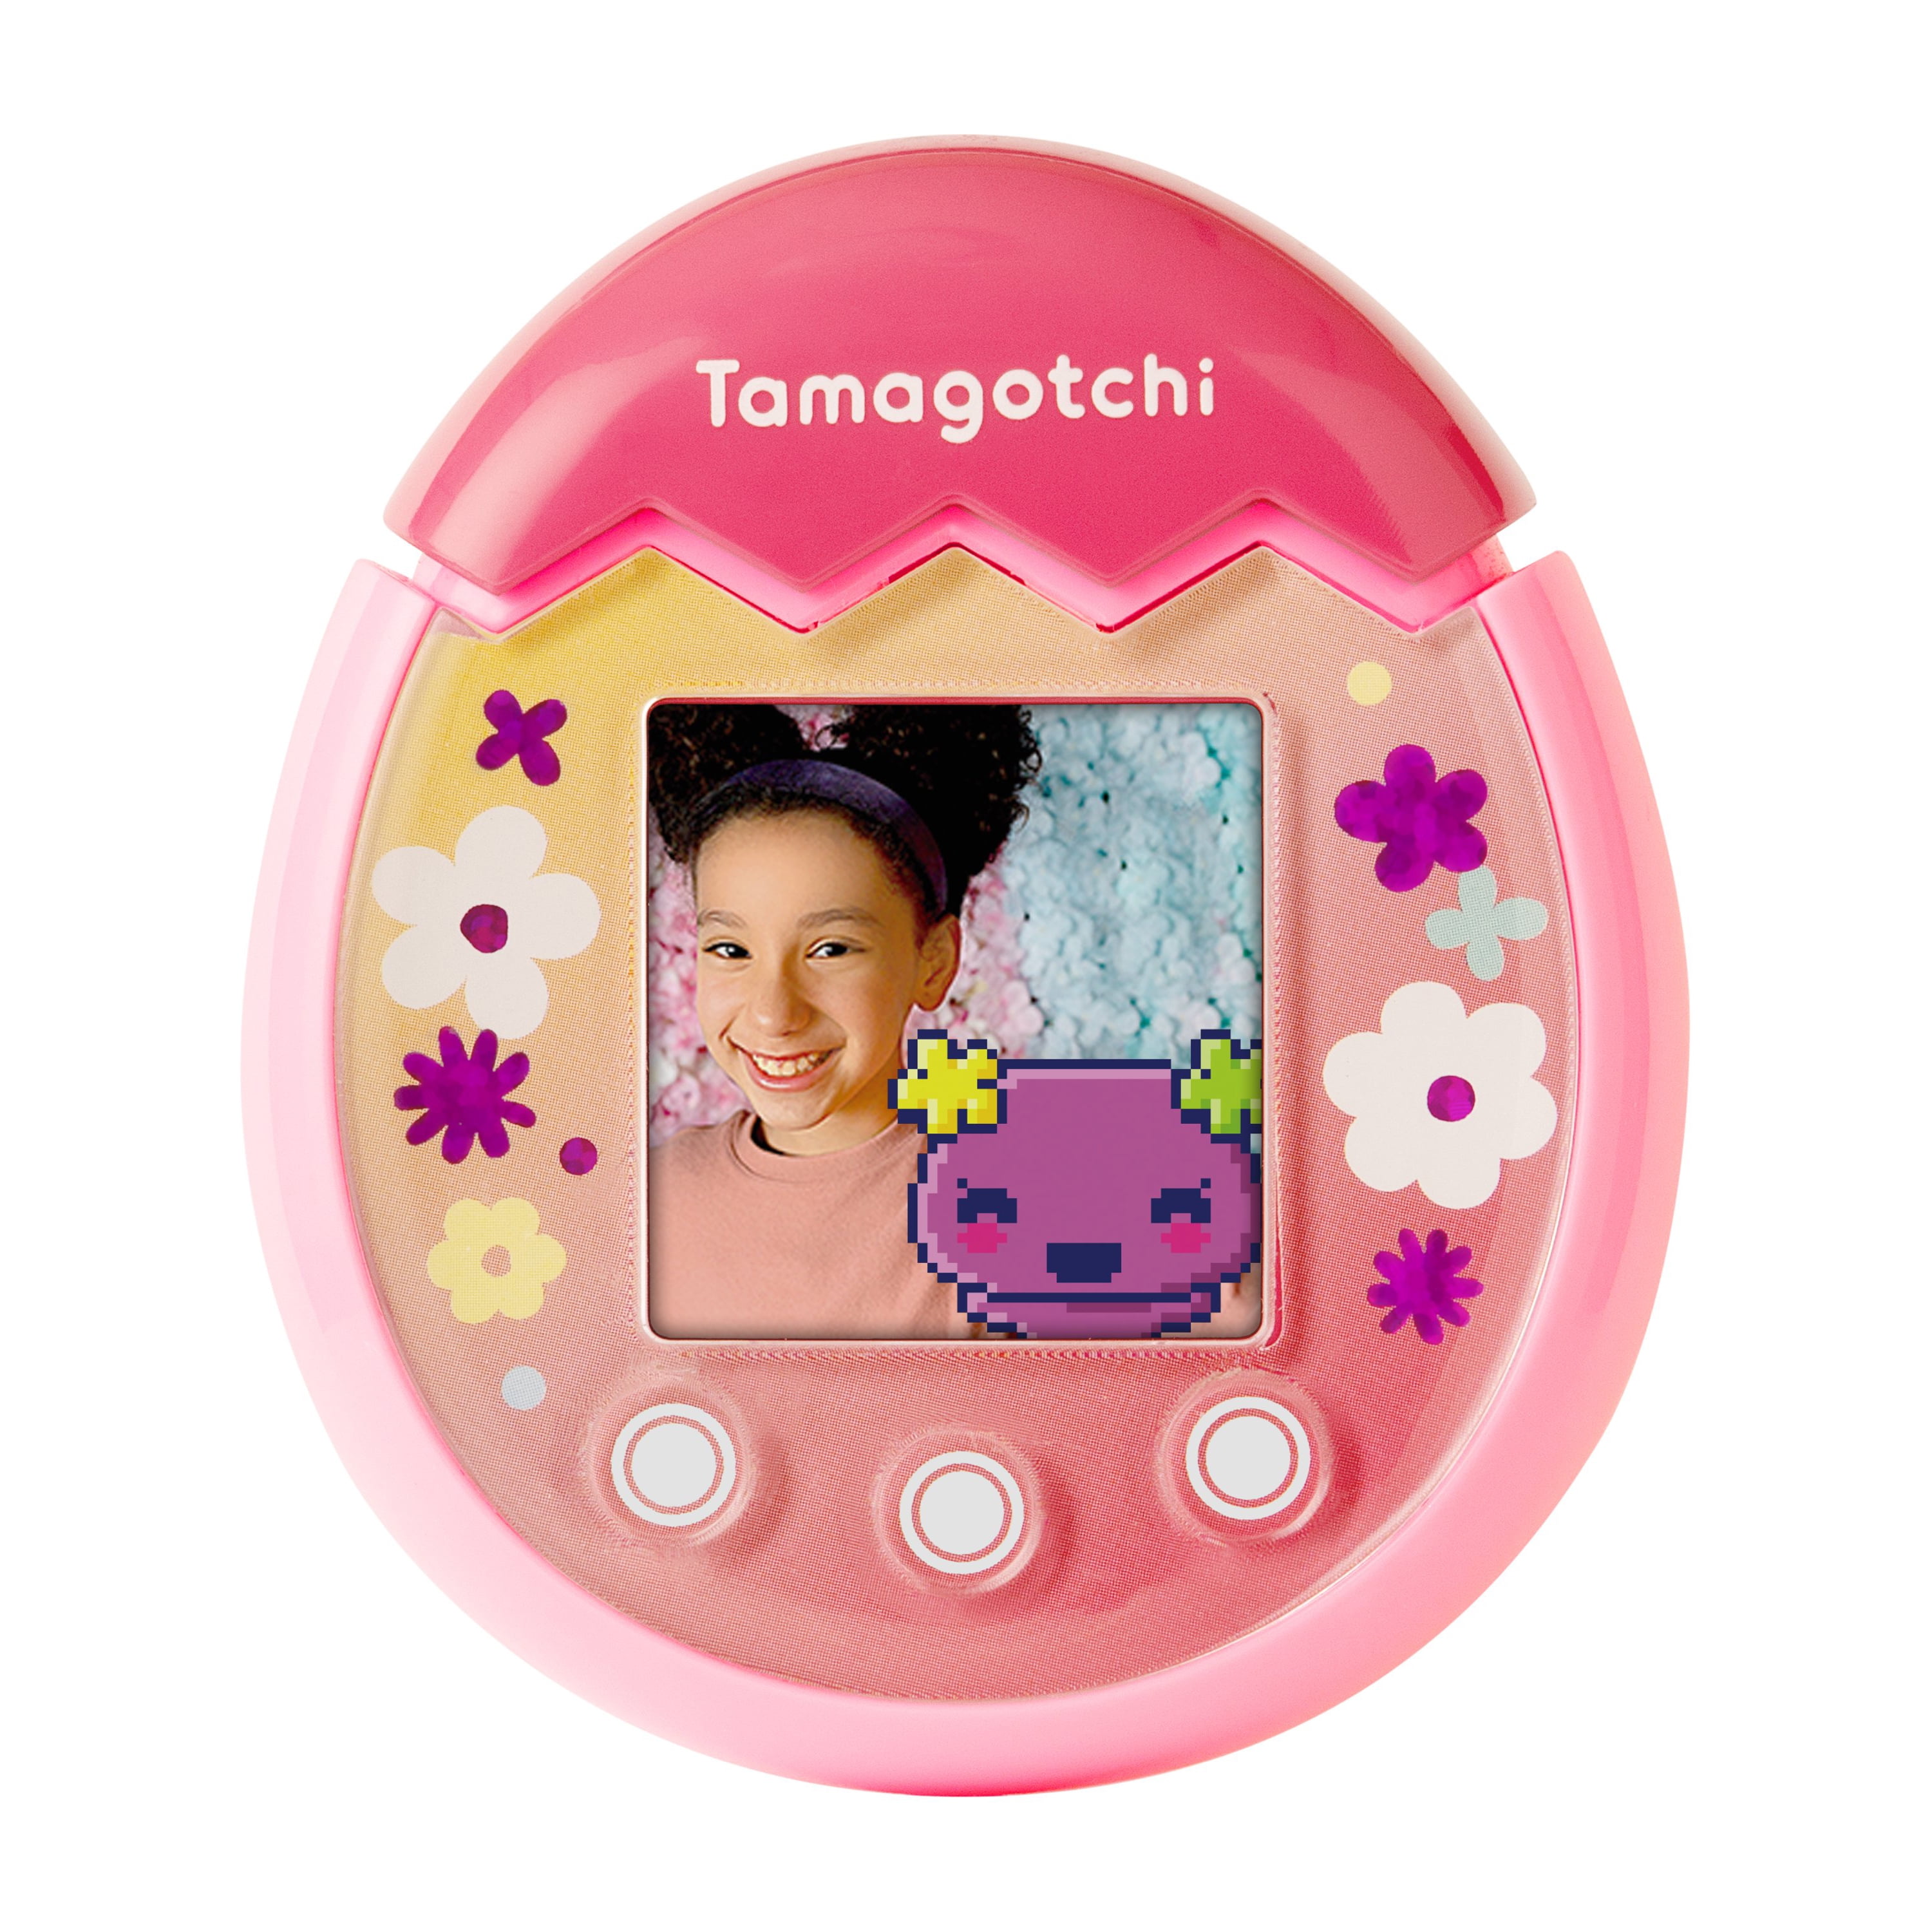 Bandai Original Tamagotchi 20th Anniversary Virtual Digital Pet Toy Pink 